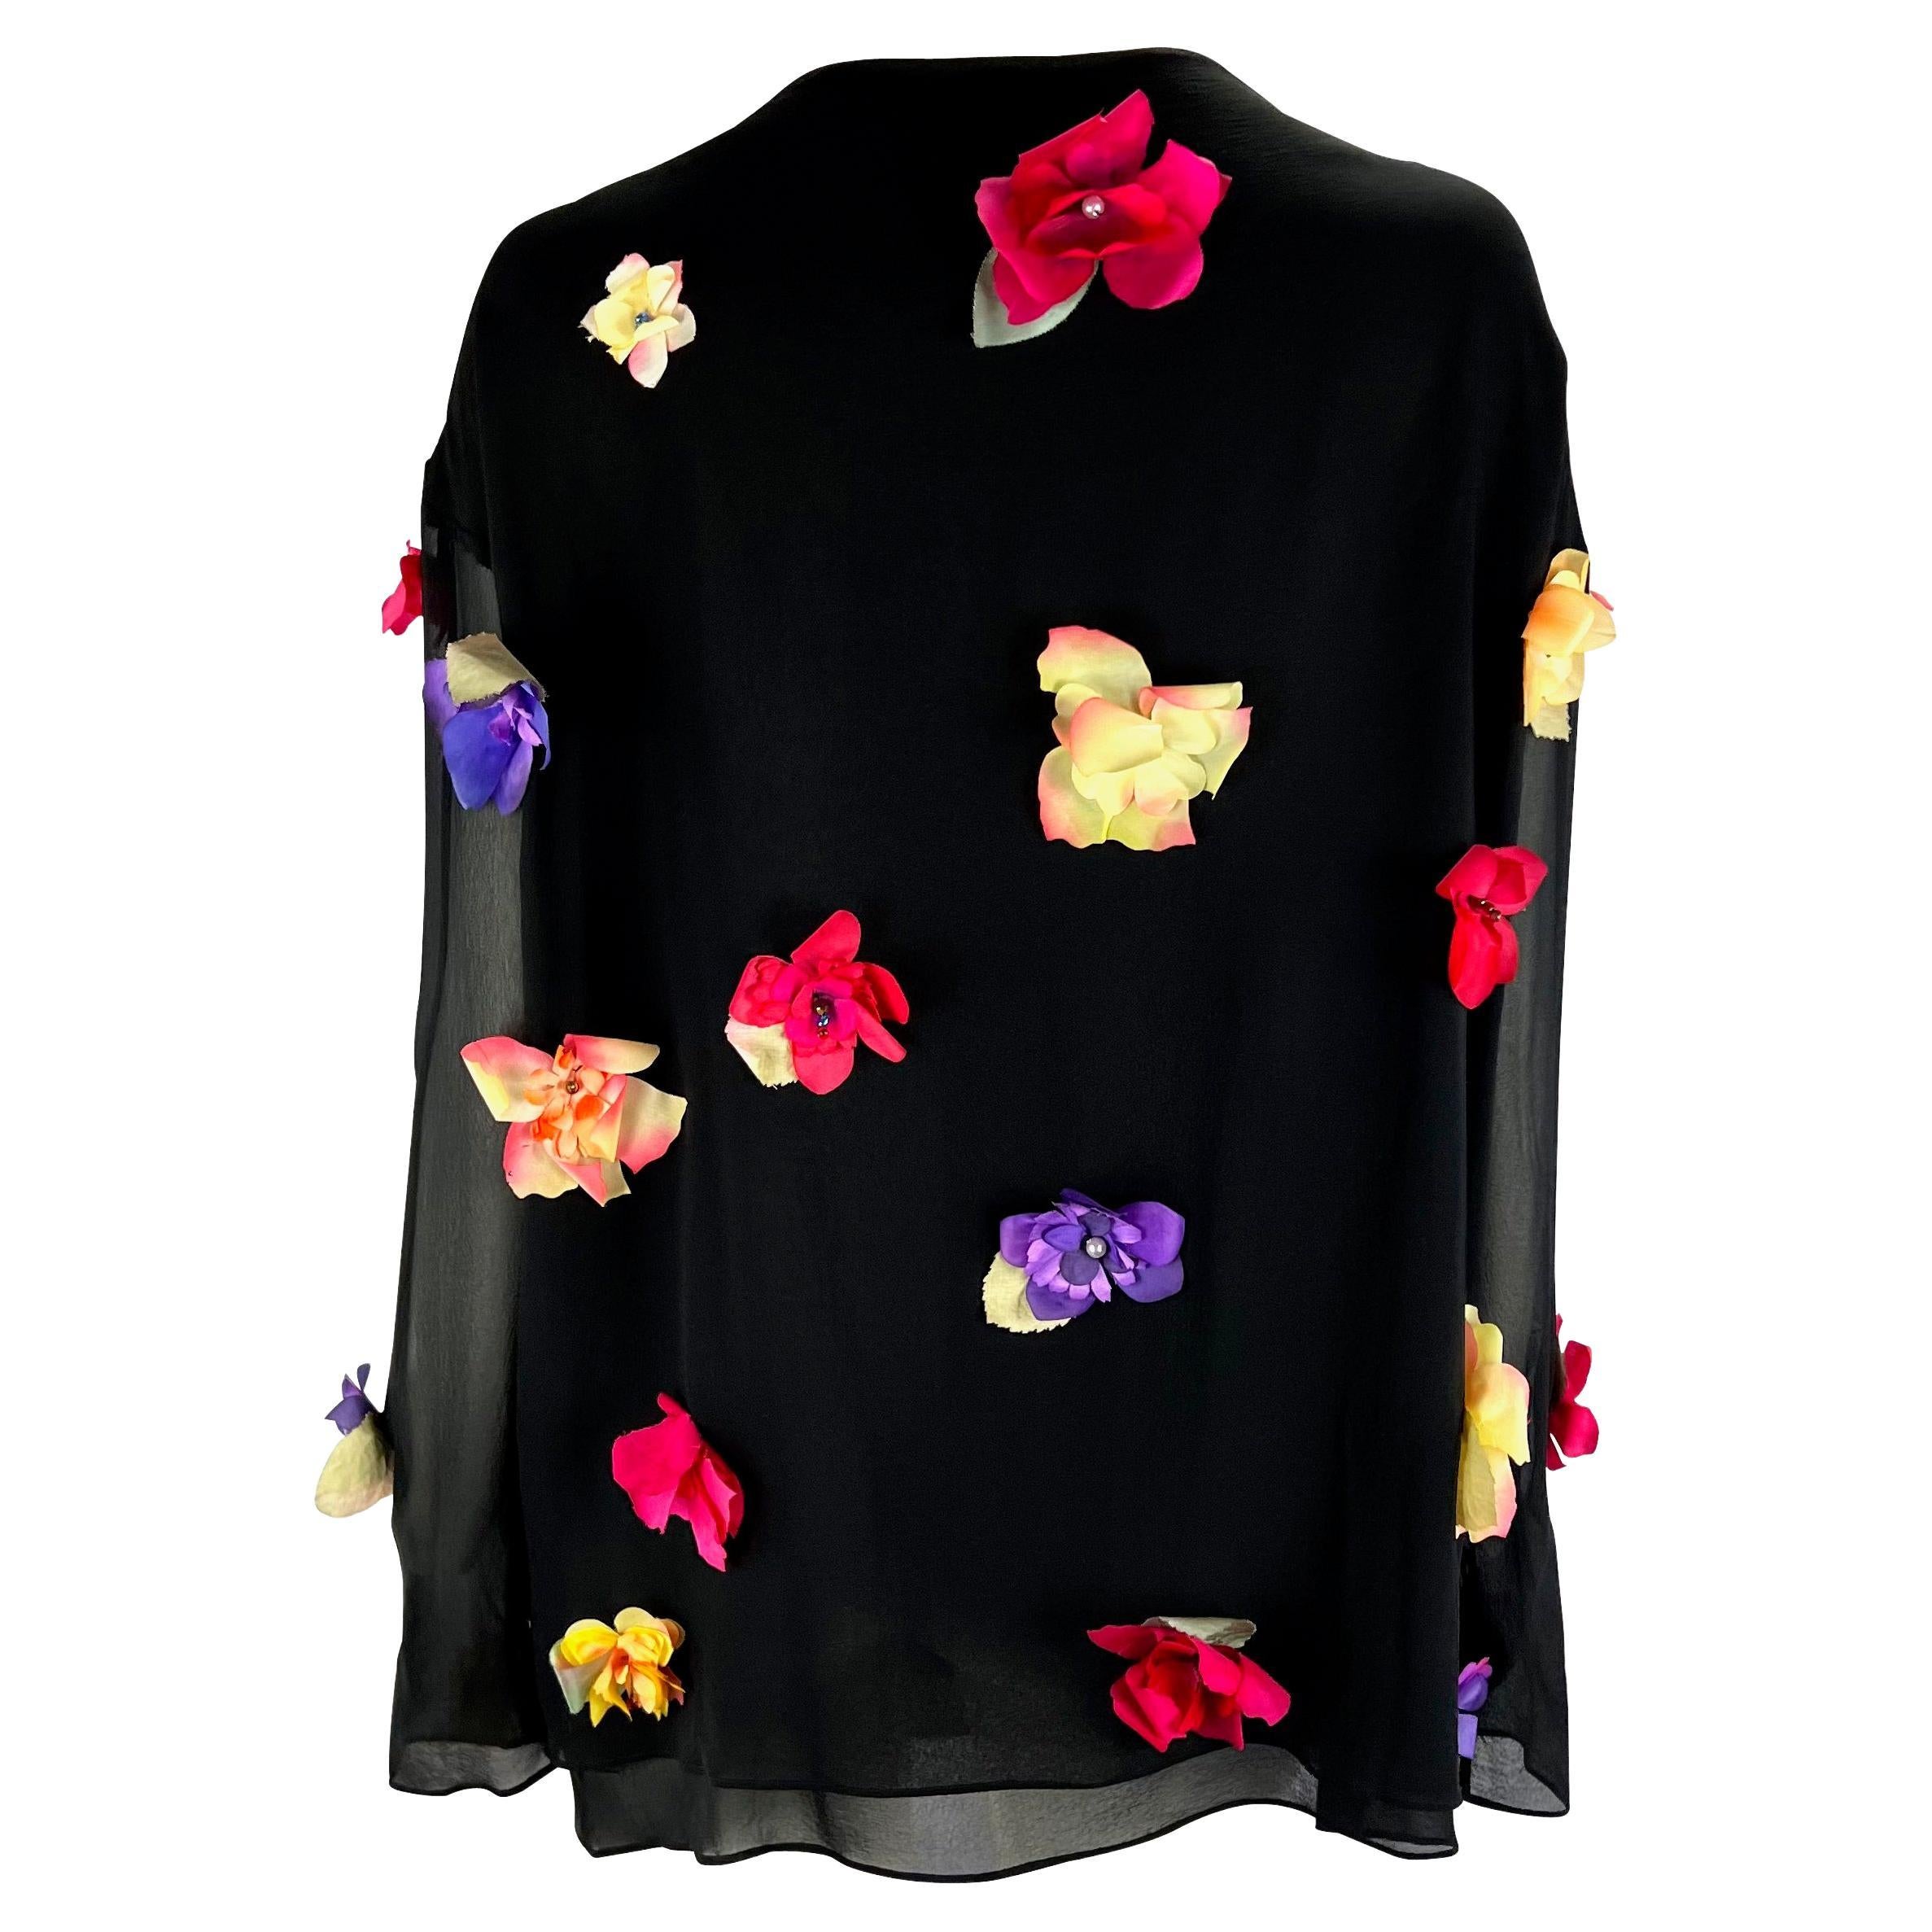 Women's S/S 1993 Dolce & Gabbana Runway Floral Appliqué Tunic Black Sheer Silk Top For Sale